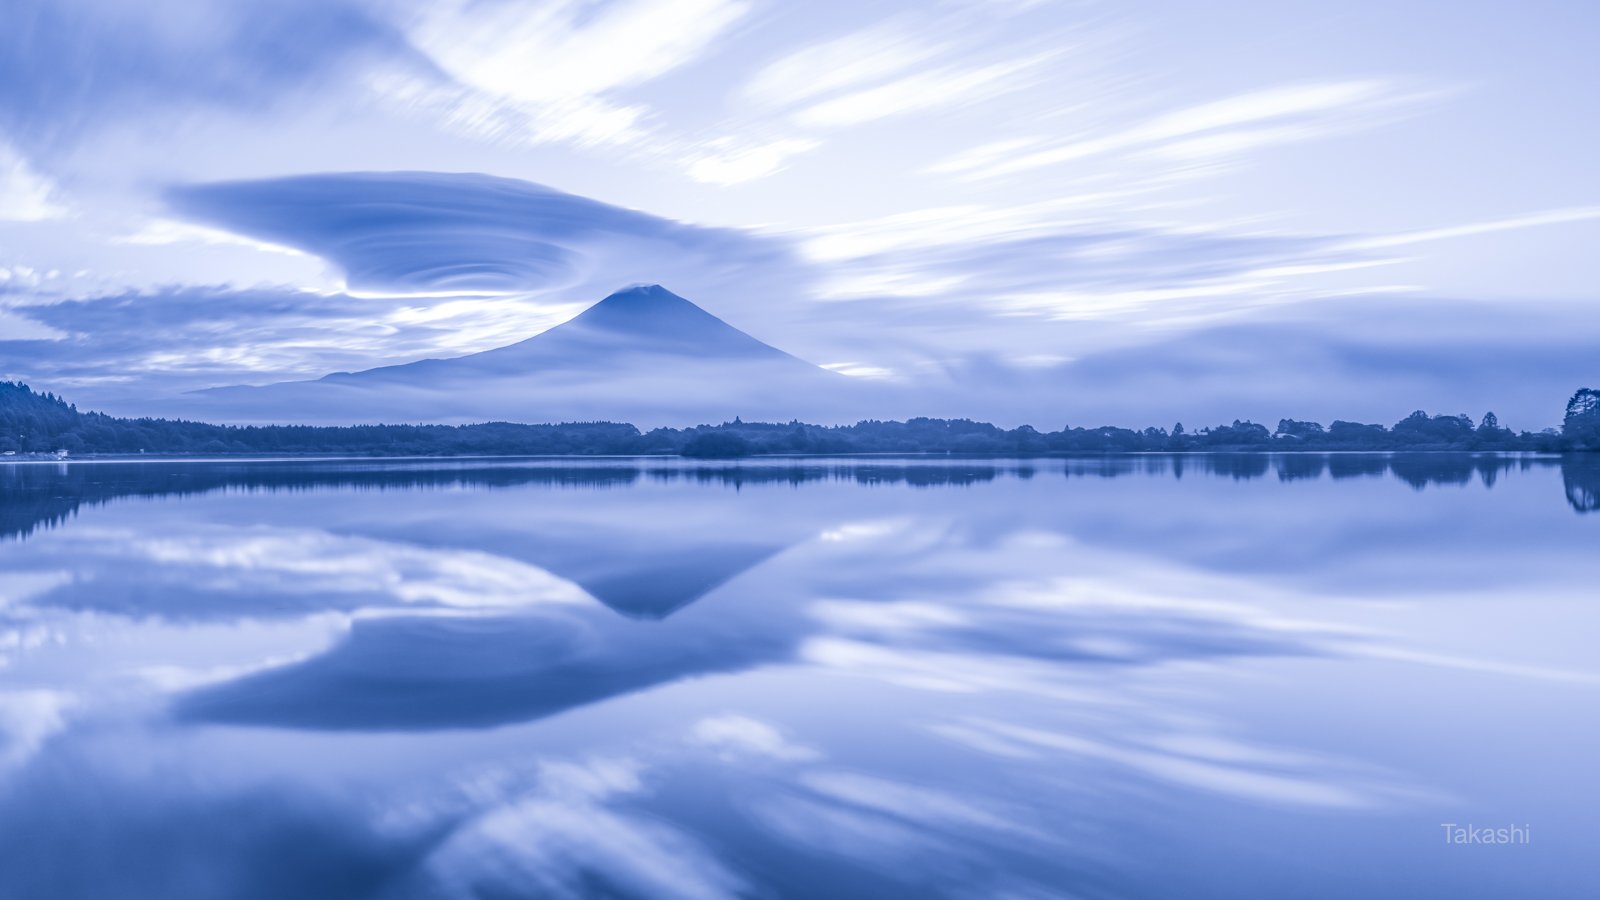 Fuji,mountain,Japan,cloud,reflection,lake,water, Takashi